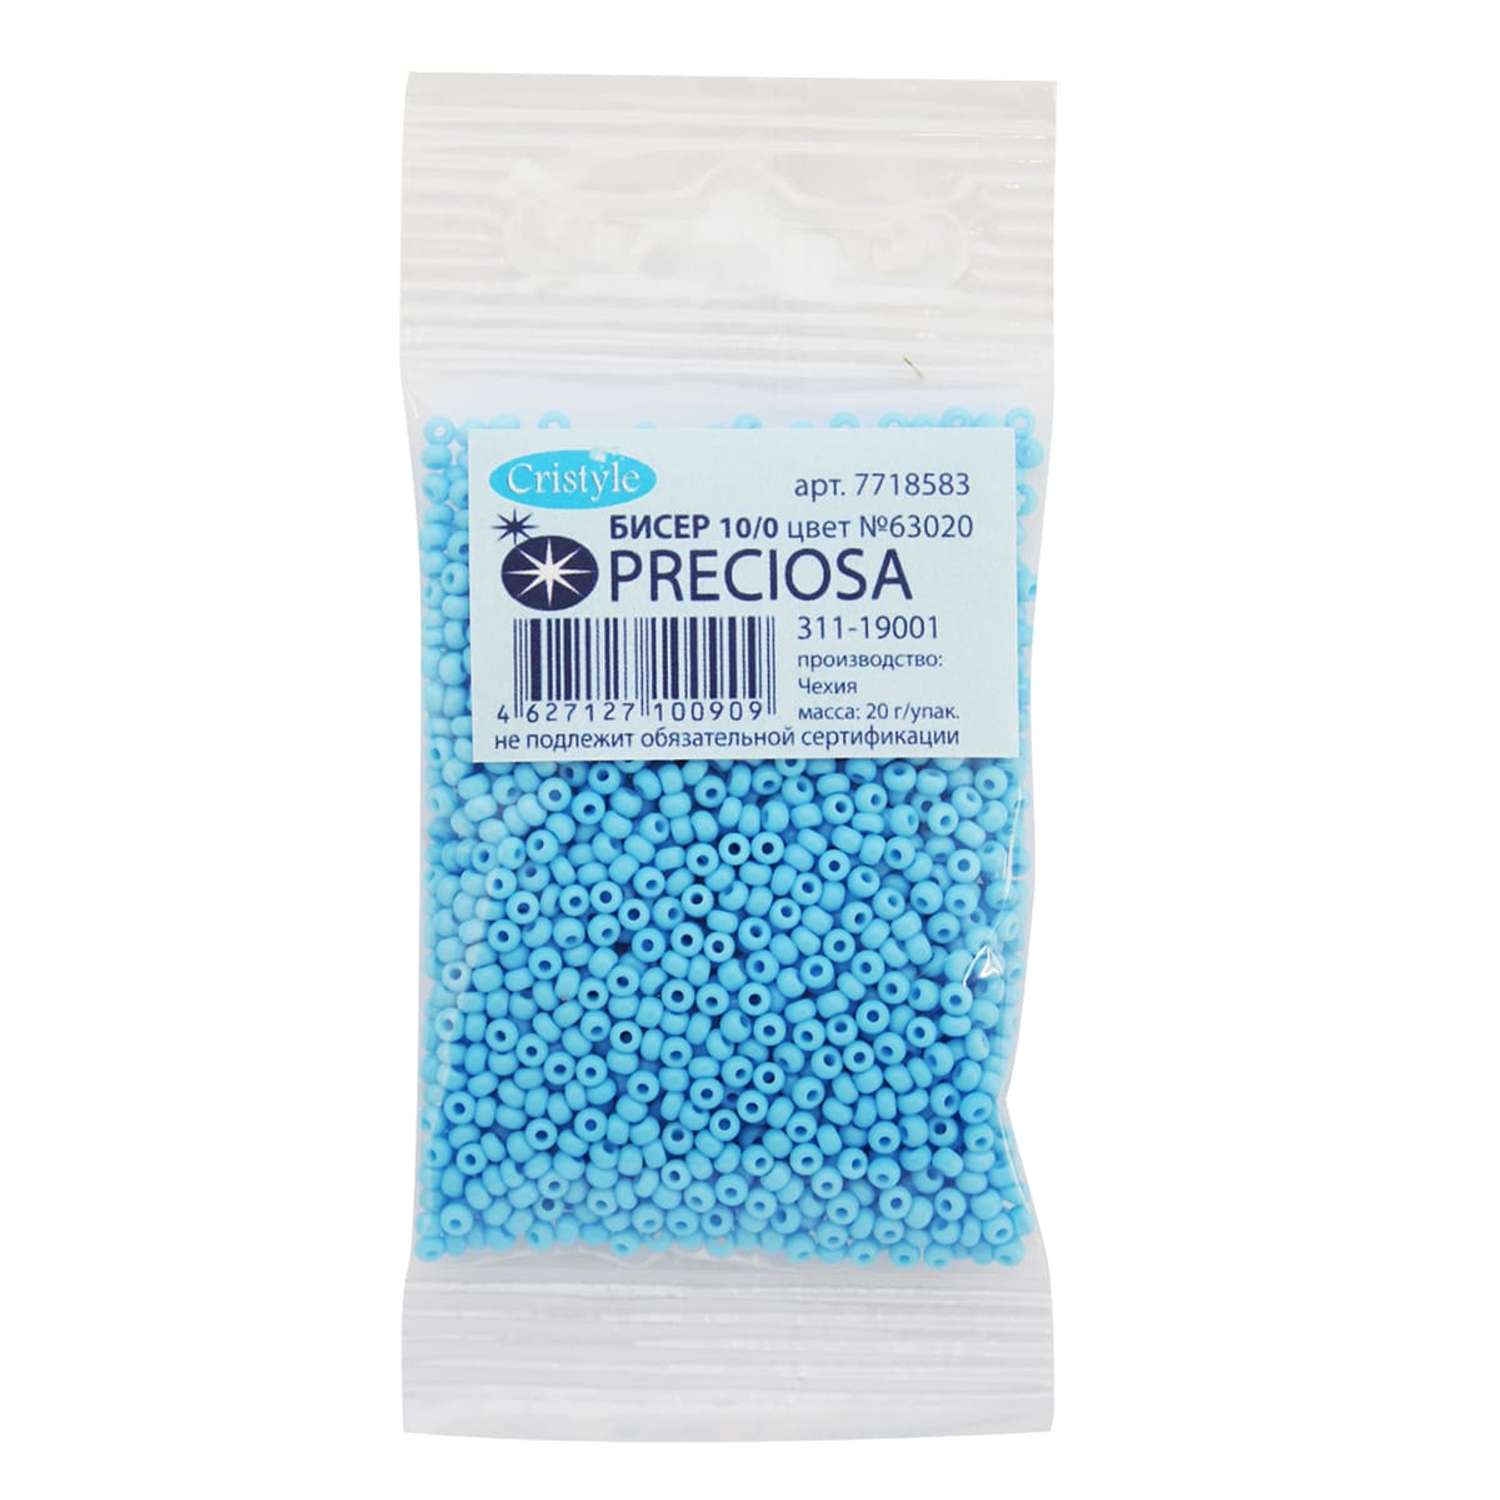 Бисер Preciosa чешский непрозрачный 10/0 20 гр Прециоза 63020 ярко-голубой - фото 3